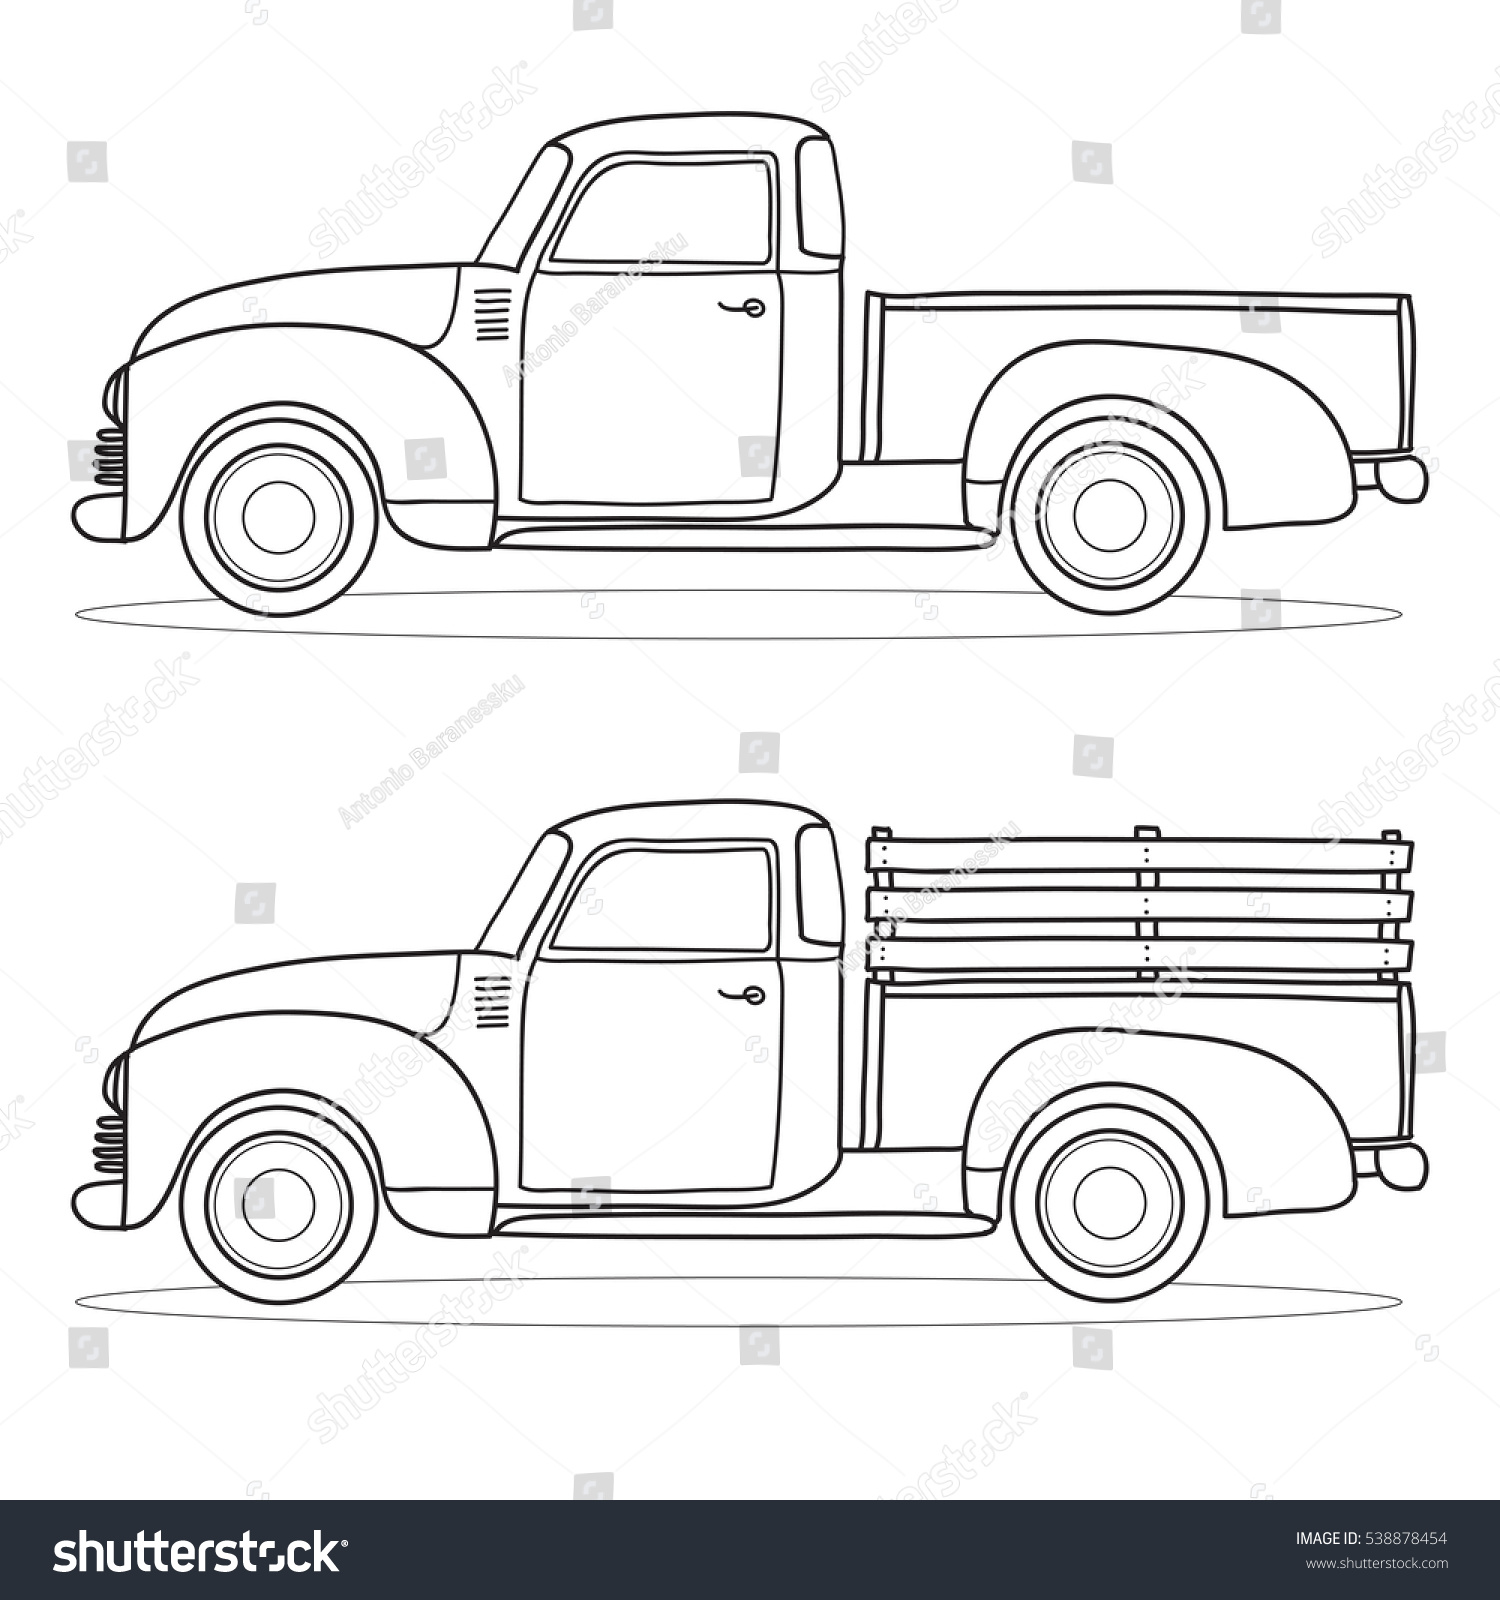 Pickup Truck Vector Outline Doodle Illustration Stock ...